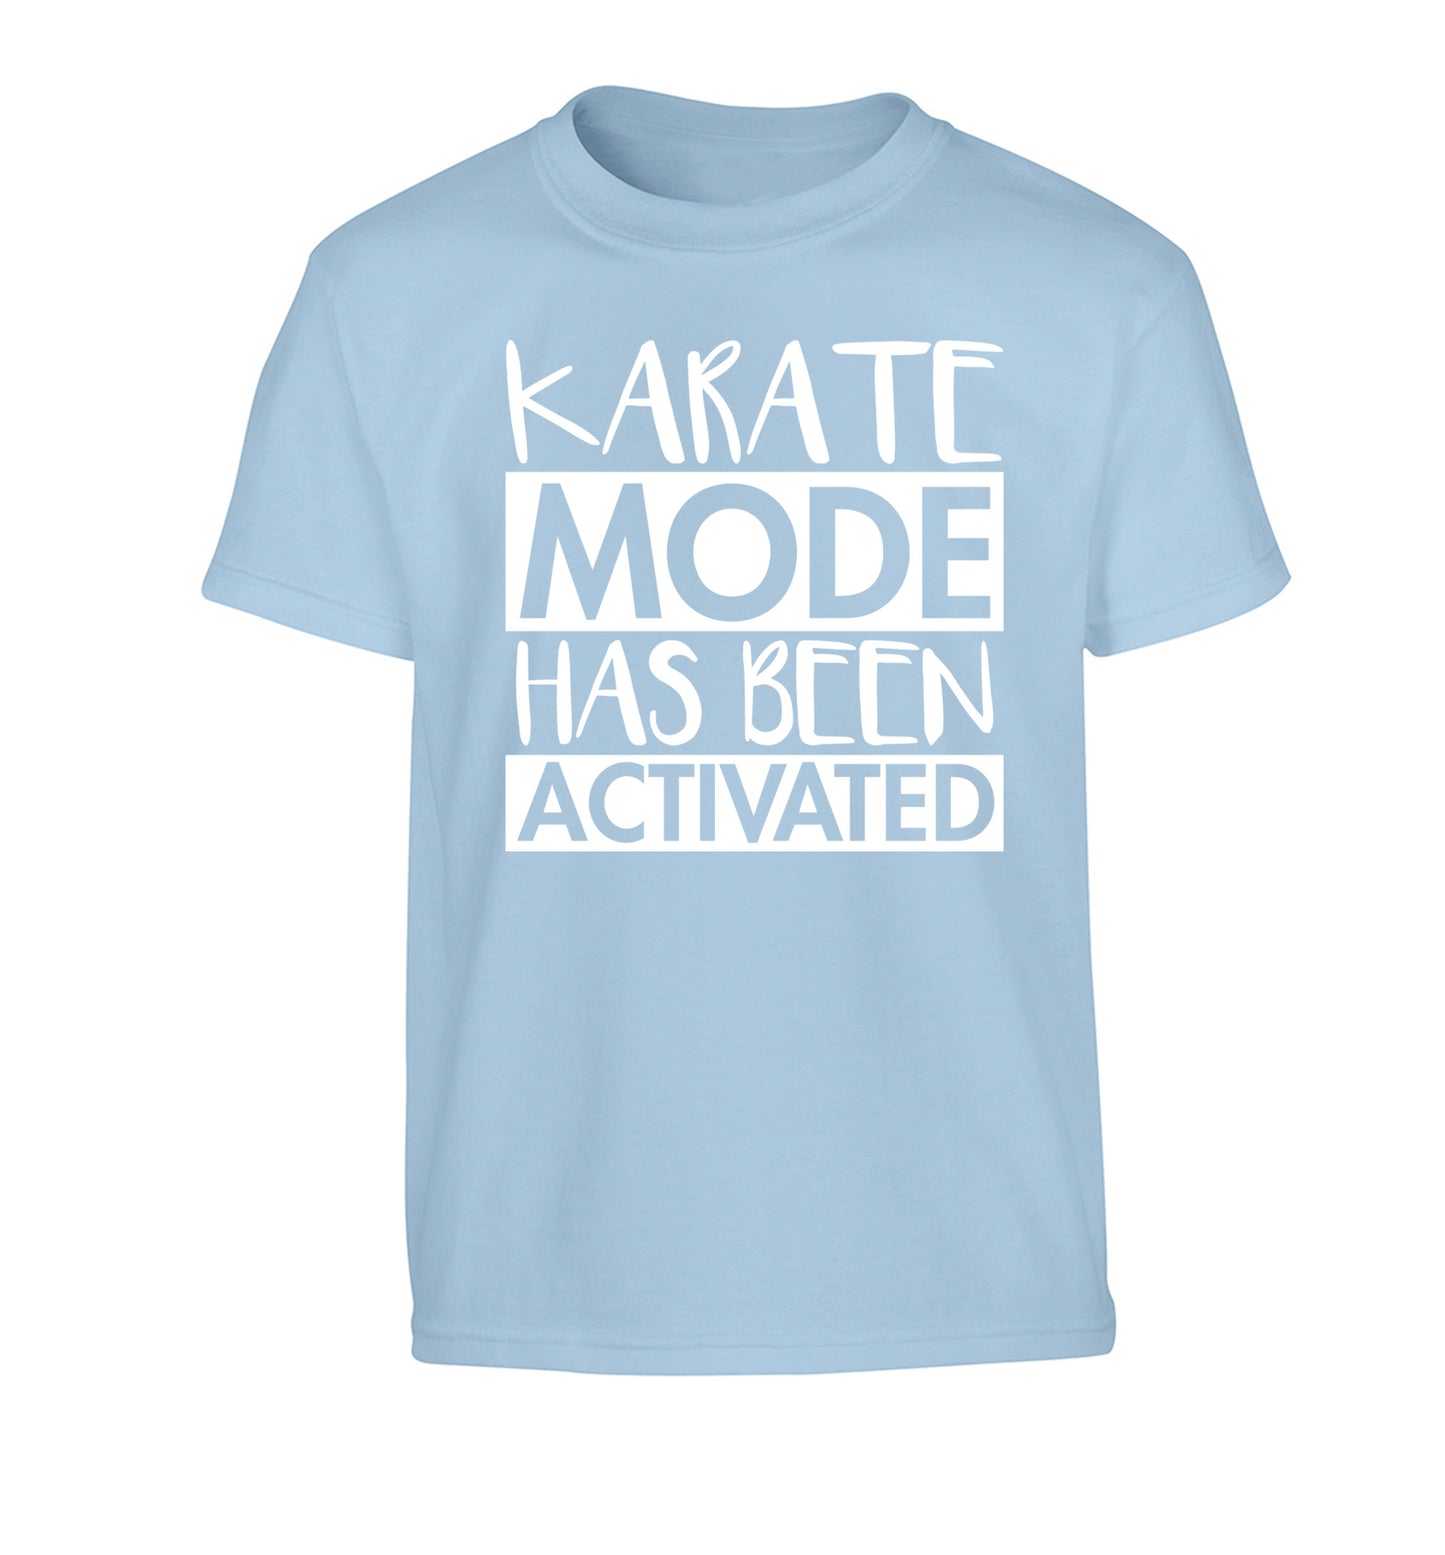 Karate mode activated Children's light blue Tshirt 12-14 Years